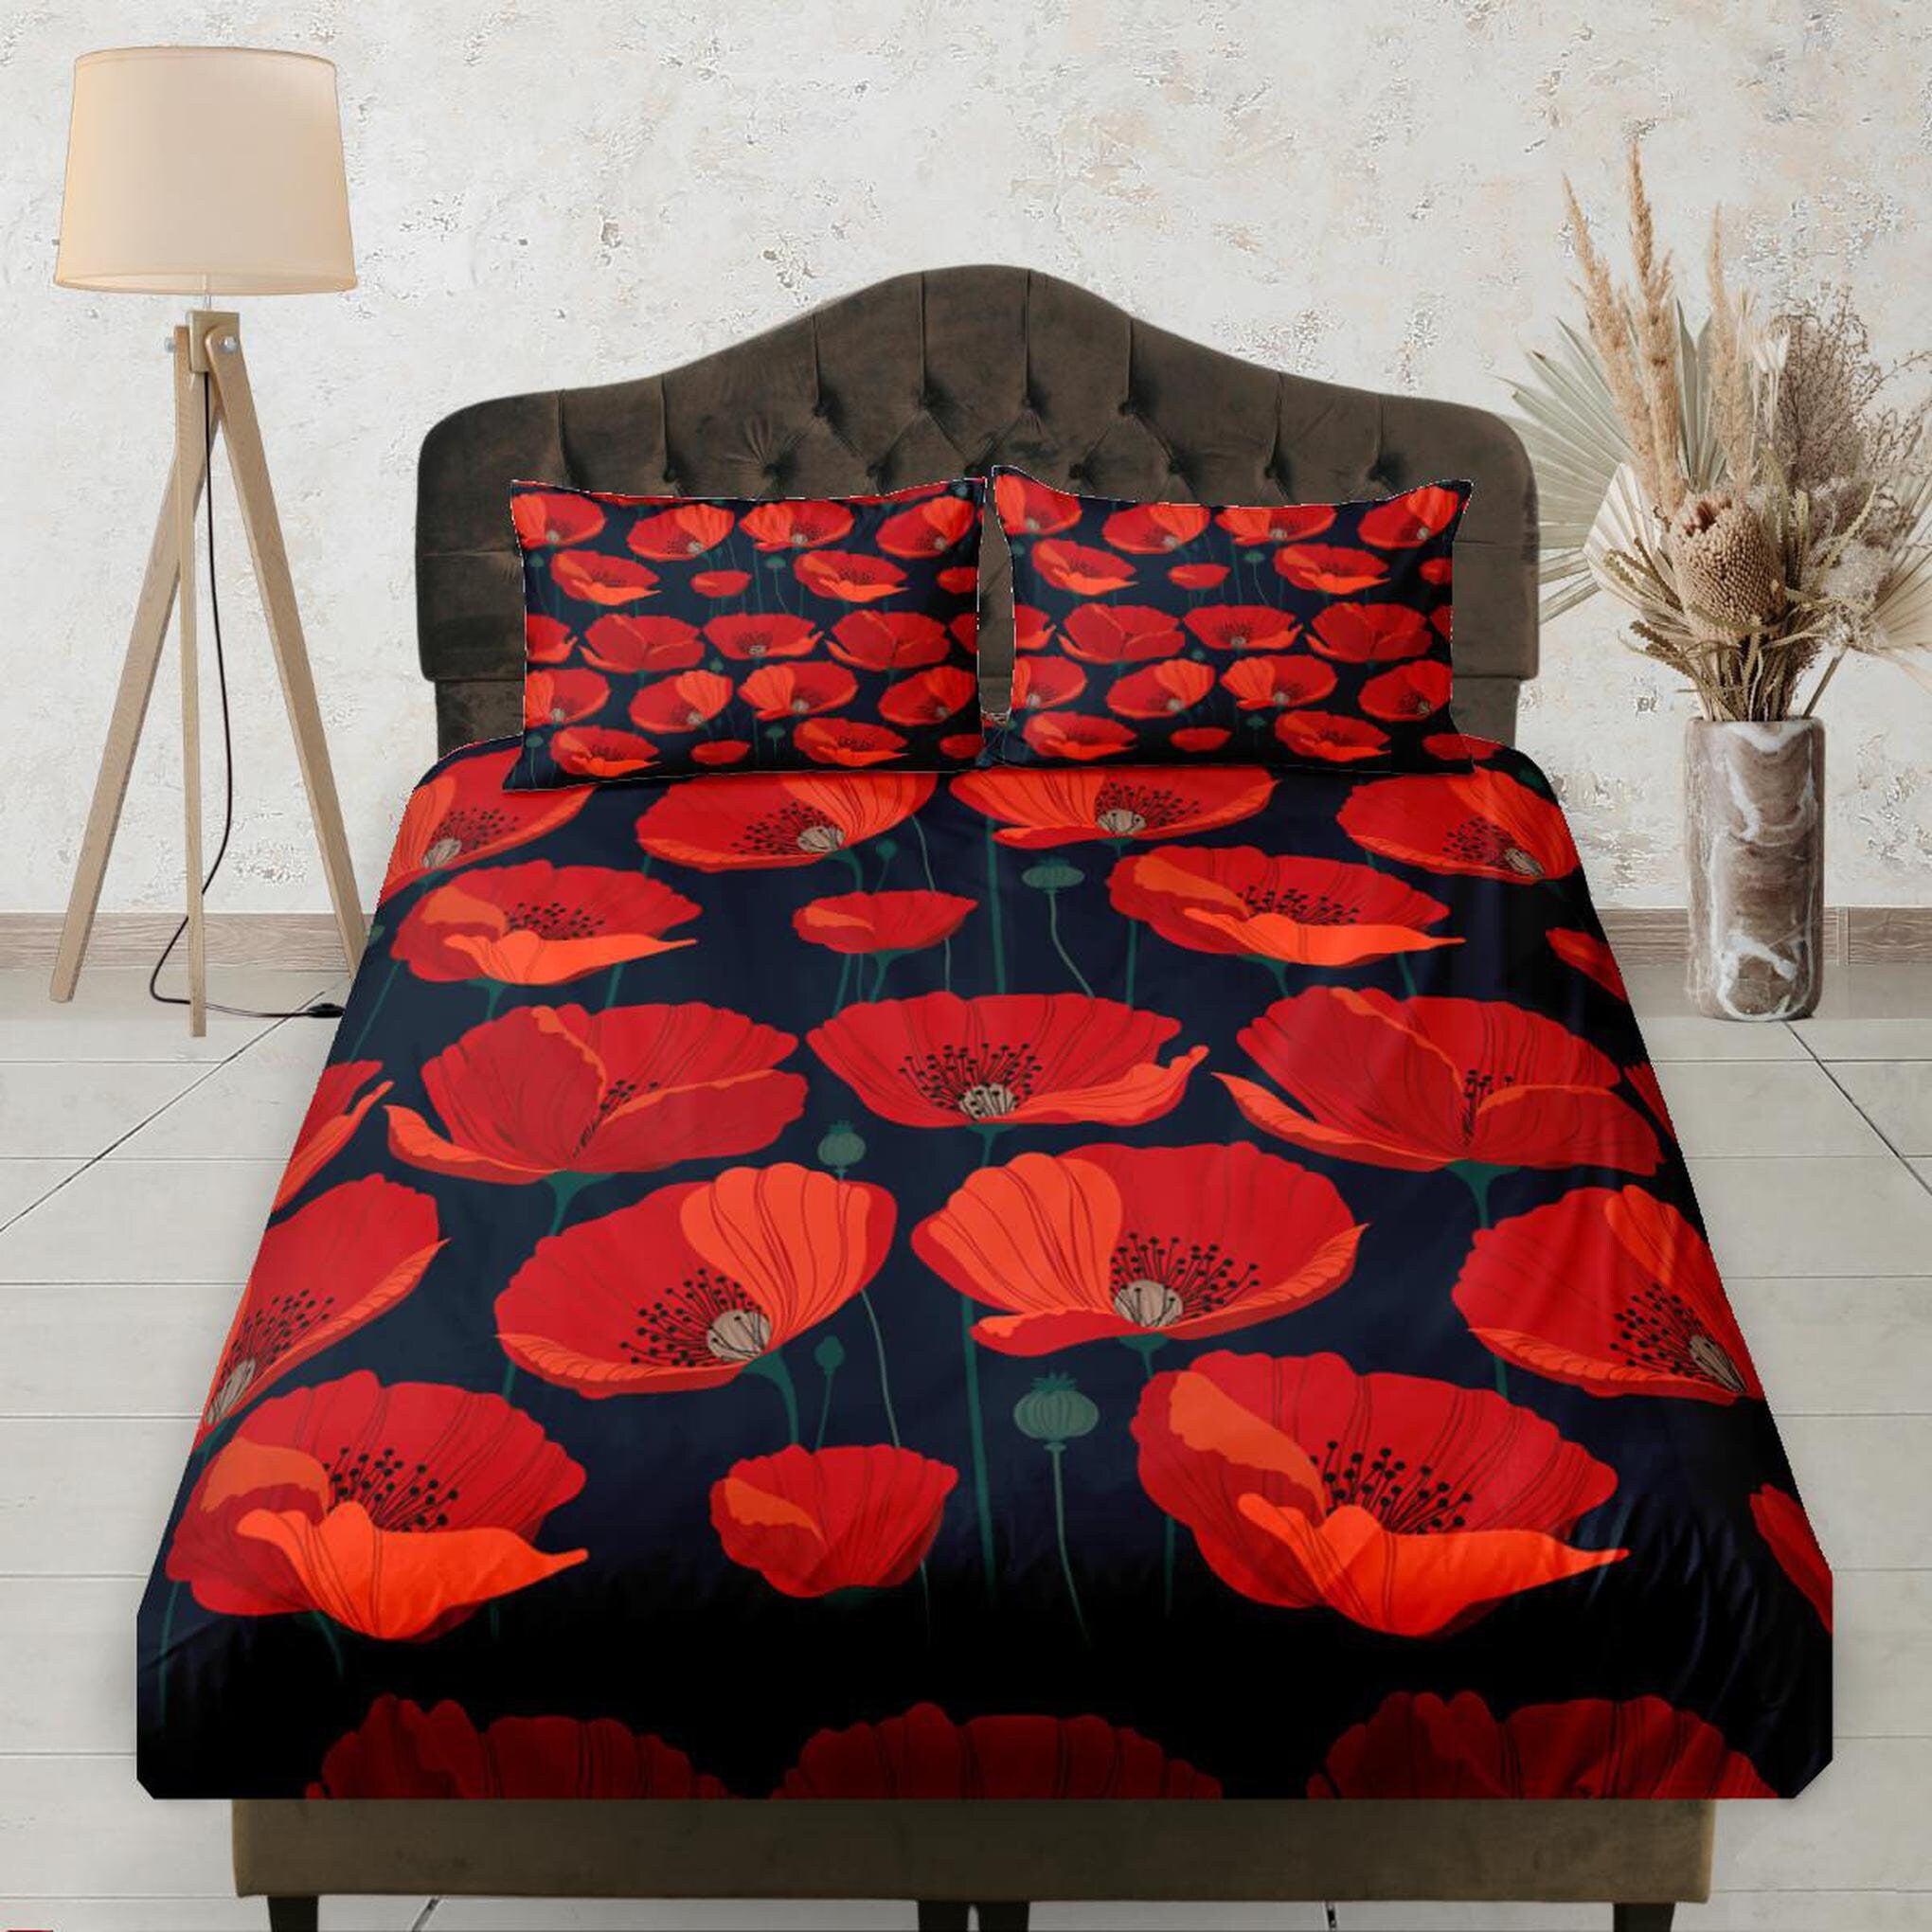 daintyduvet Poppy Red Fitted Sheet Deep Pocket, Floral Prints, Aesthetic Boho Bedding Set Full, Elastic Bedsheet, Dorm Bedding, Crib Sheet, King, Queen